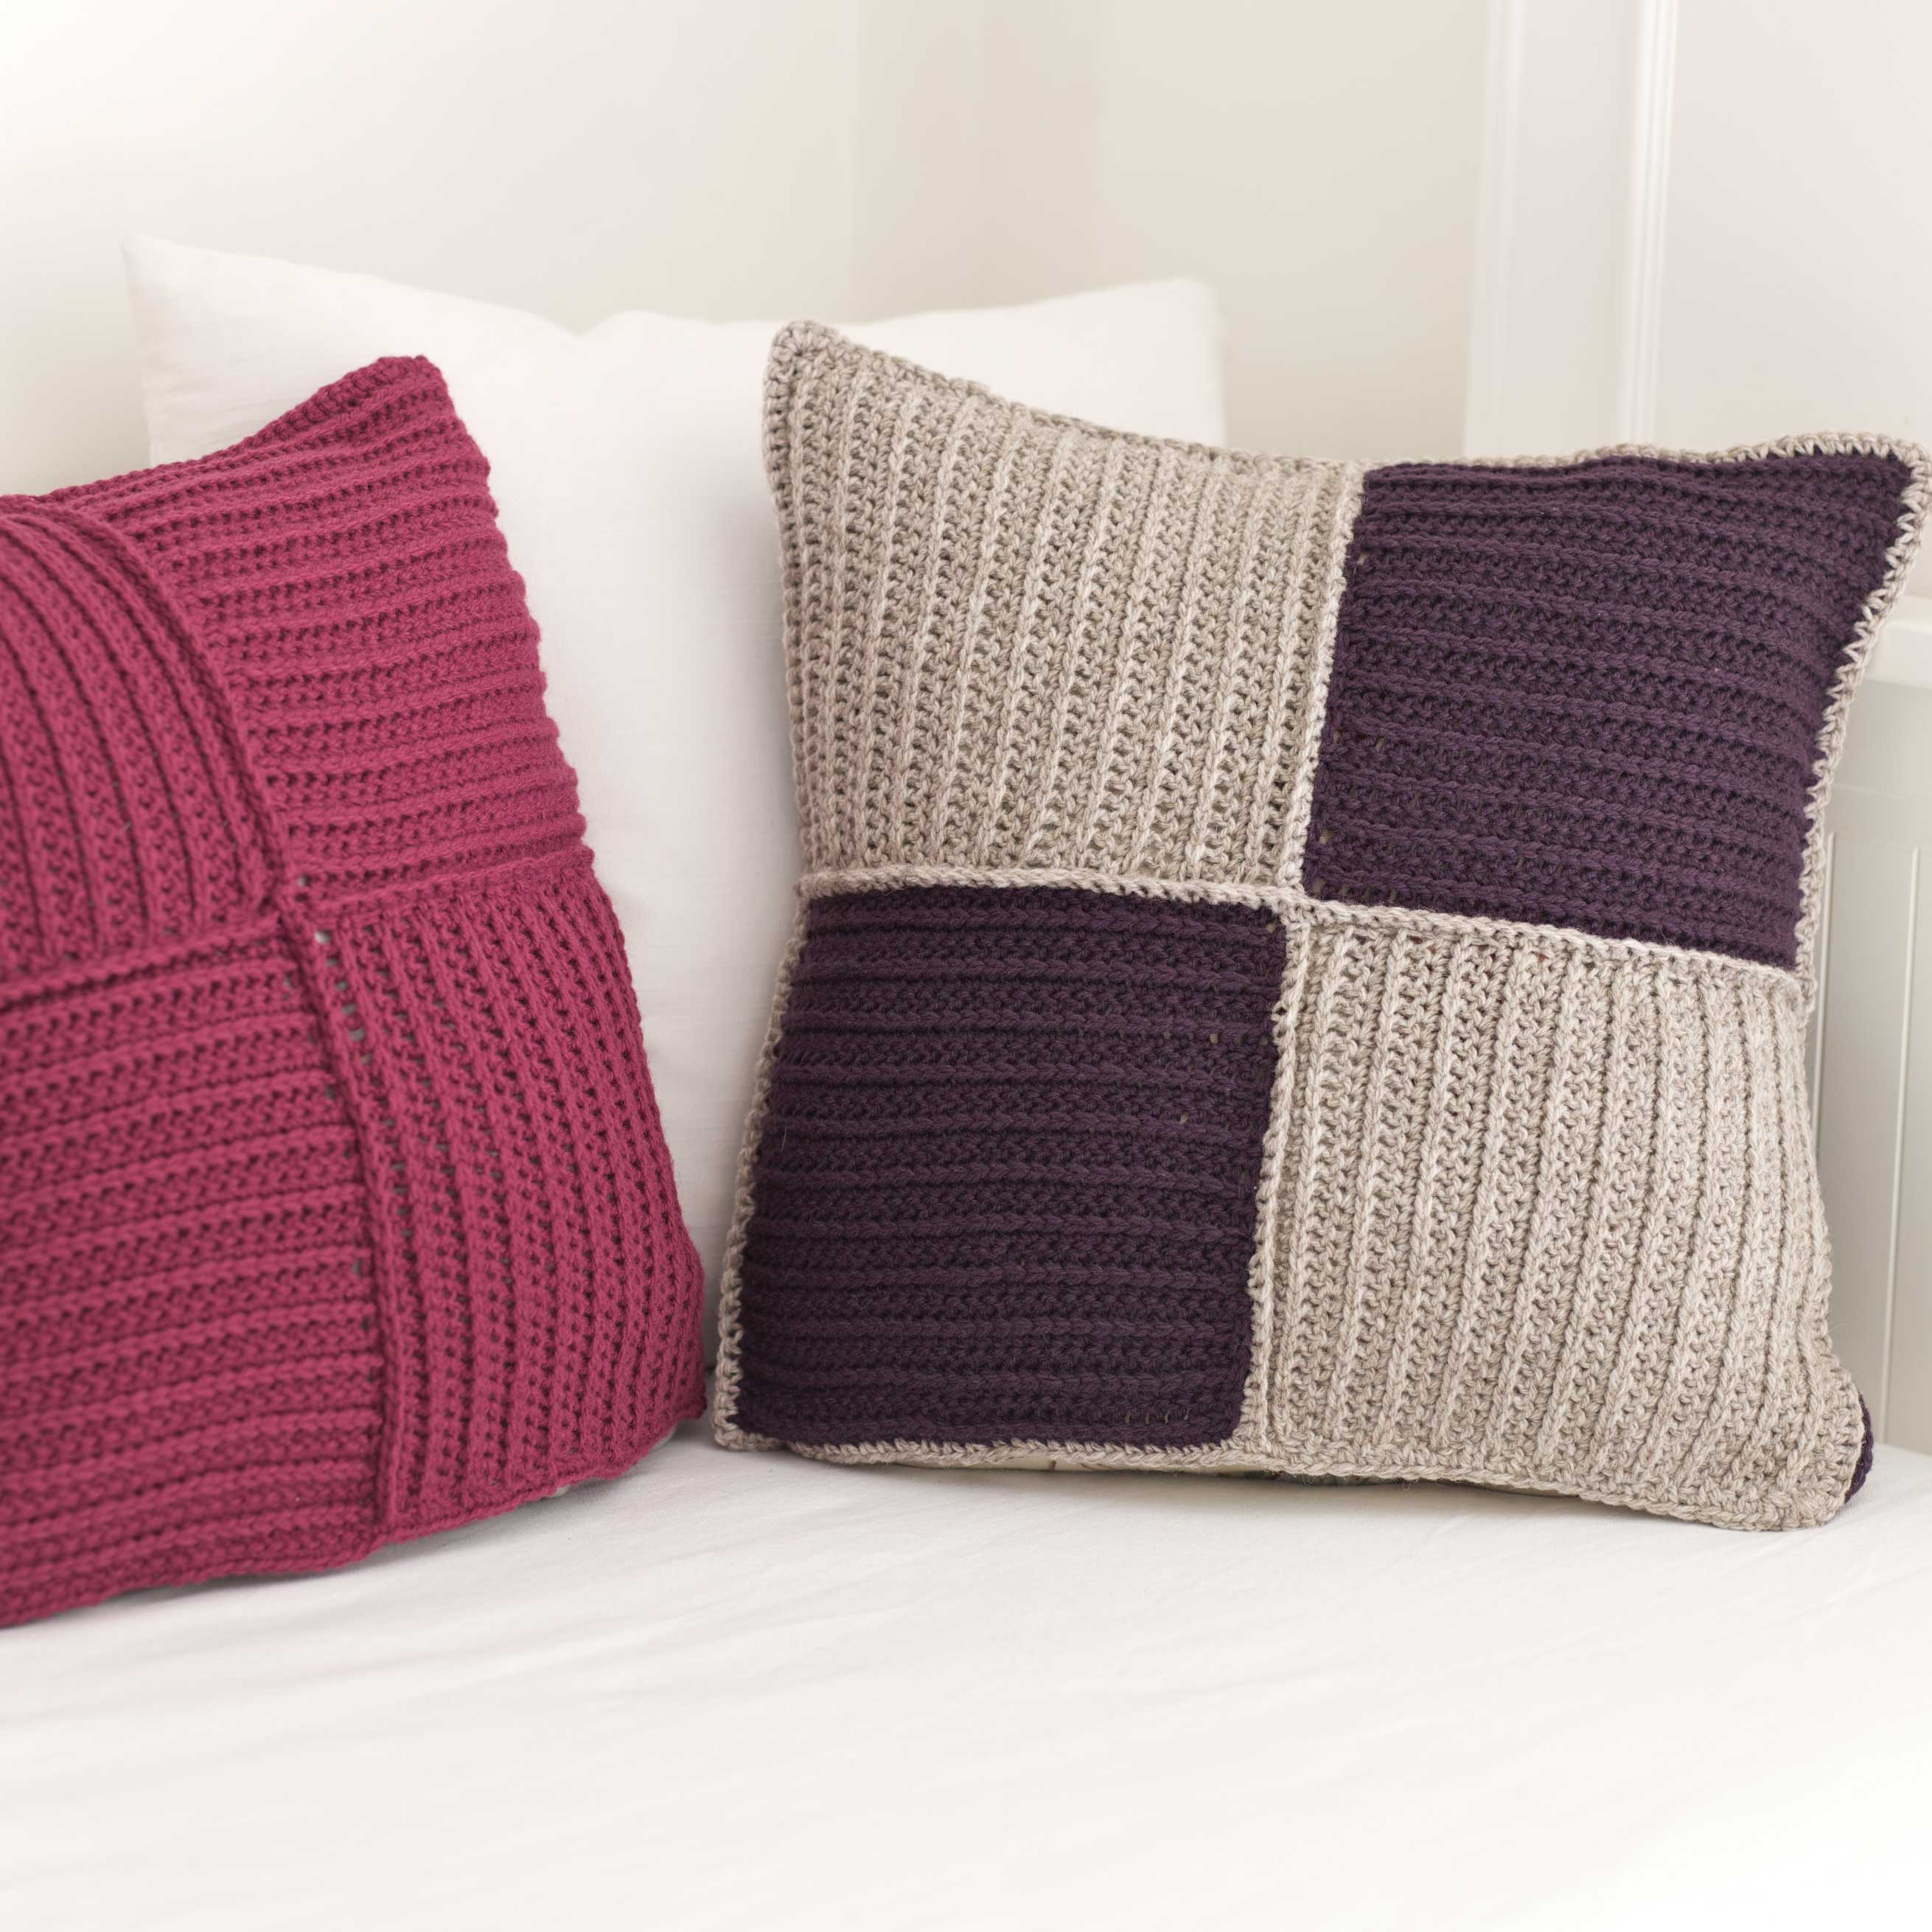 Knitting Patterns For Cushions Crochet Cushion Gallery Craftgawker